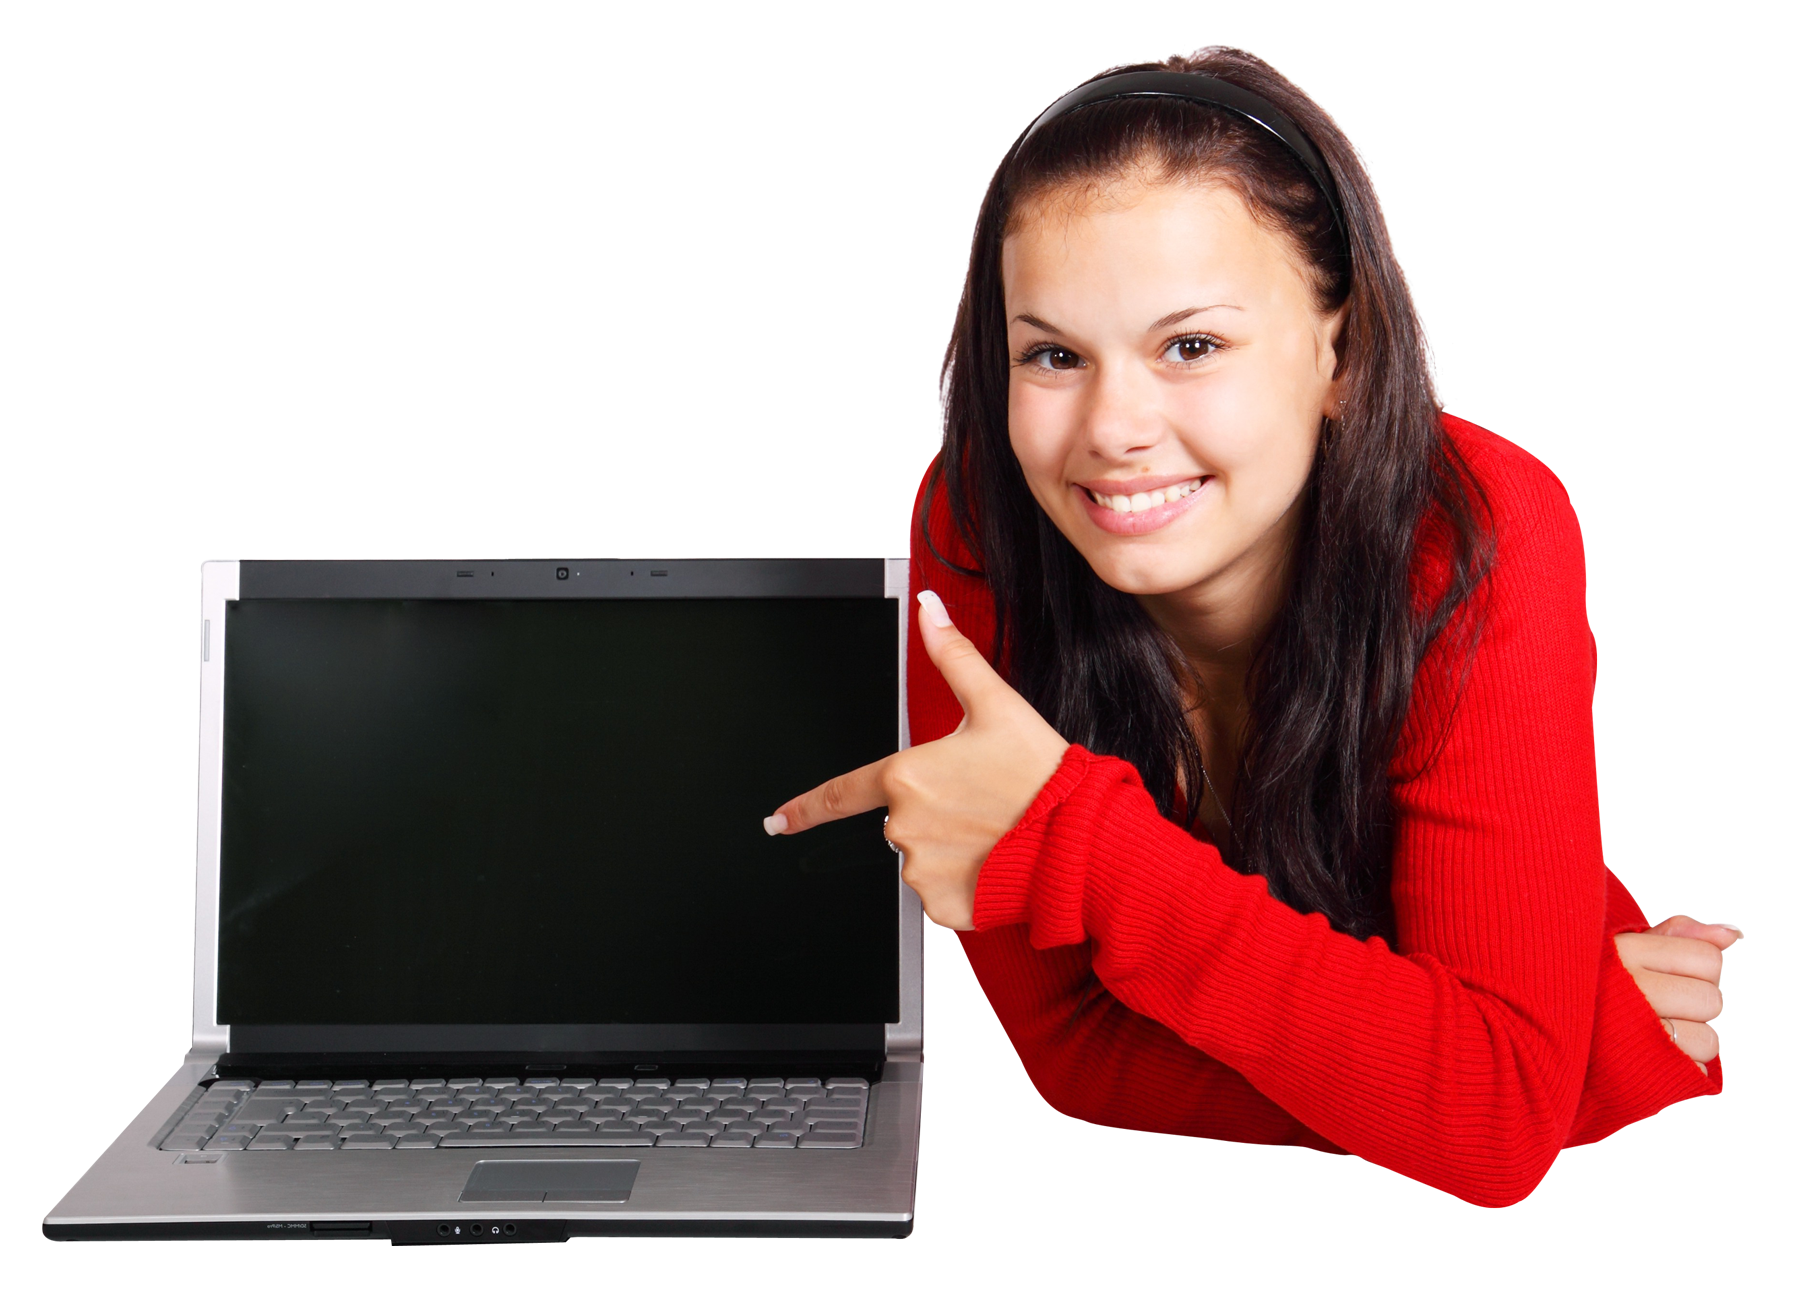 Young Girl With Laptop Transparent PNG Image - PngPix